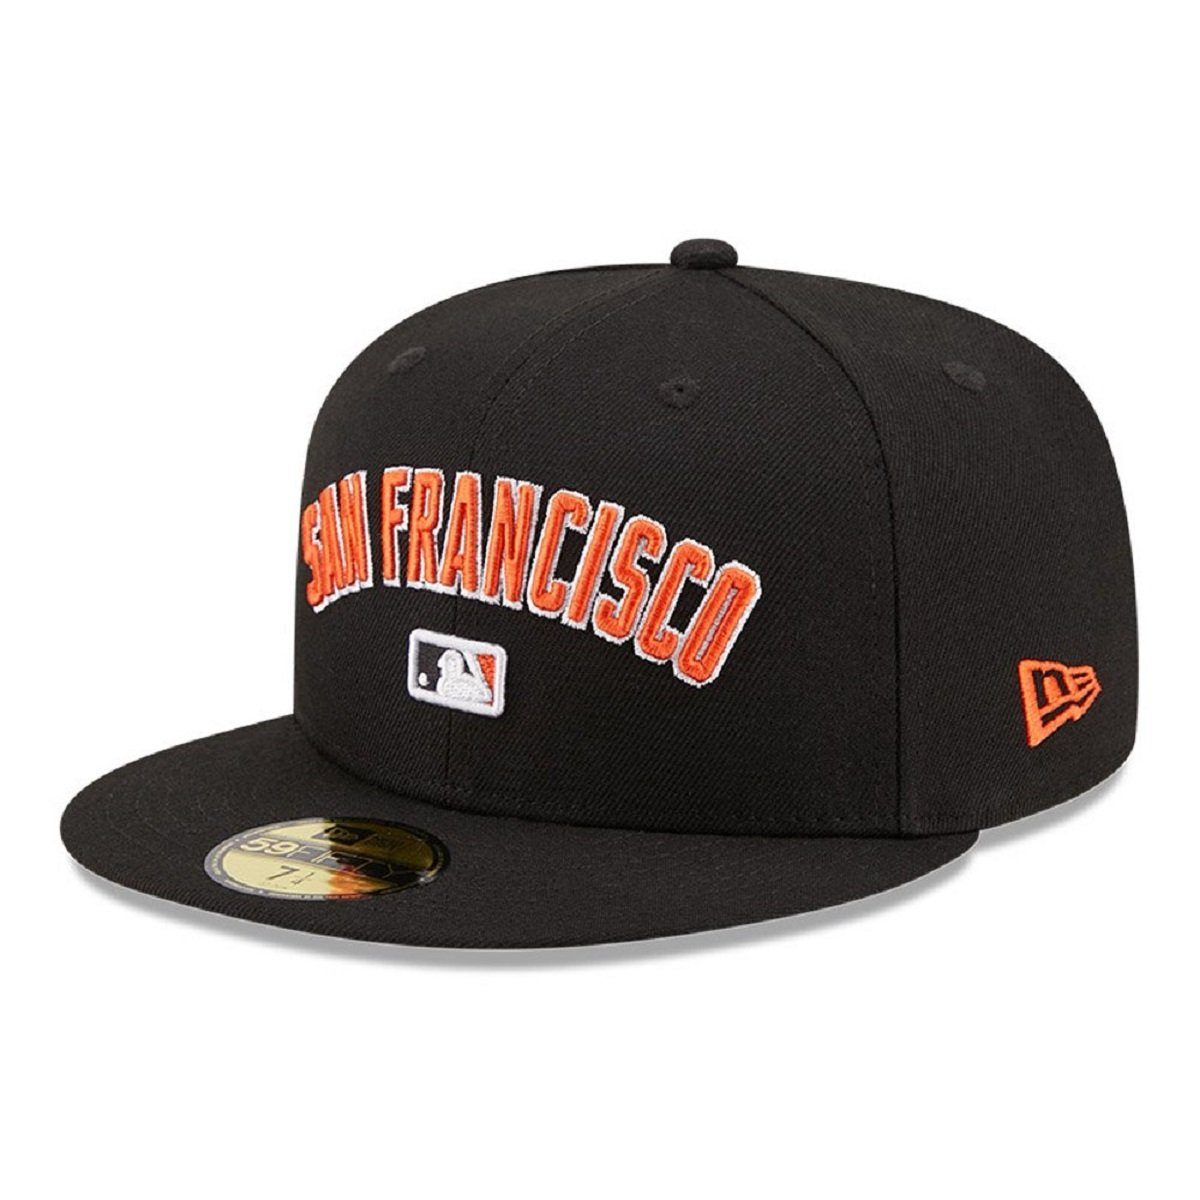 San Francisco Fitted Team Cap MLB New Giants Era